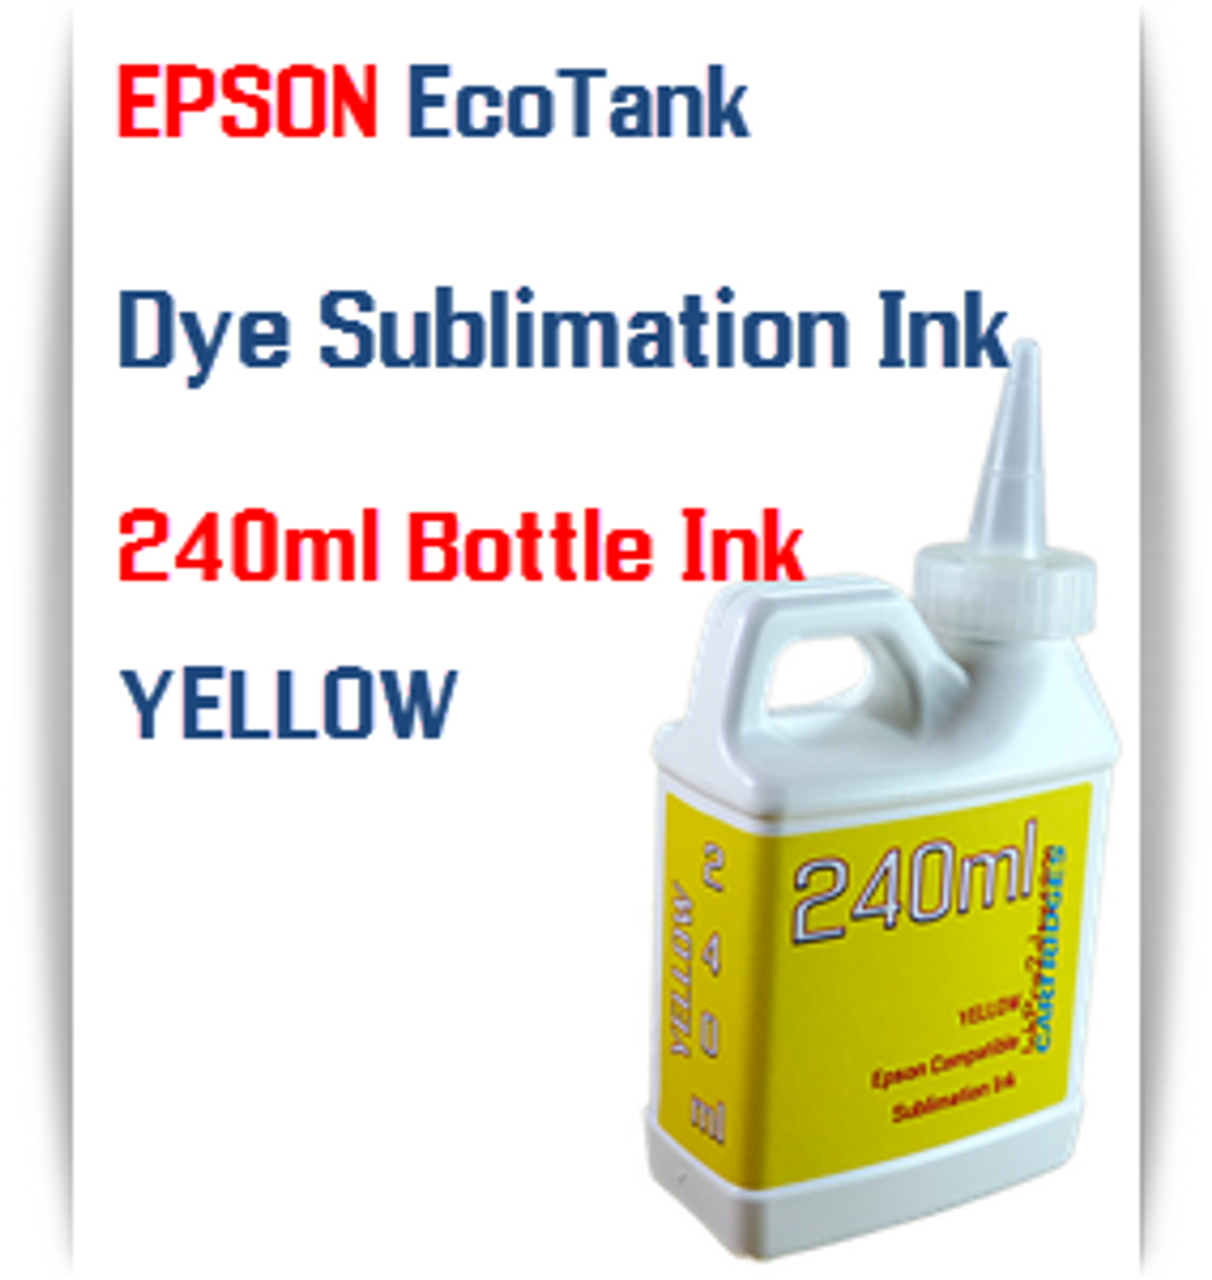 Yellow EPSON EcoTank printer Dye Sublimation Ink 240ml bottles